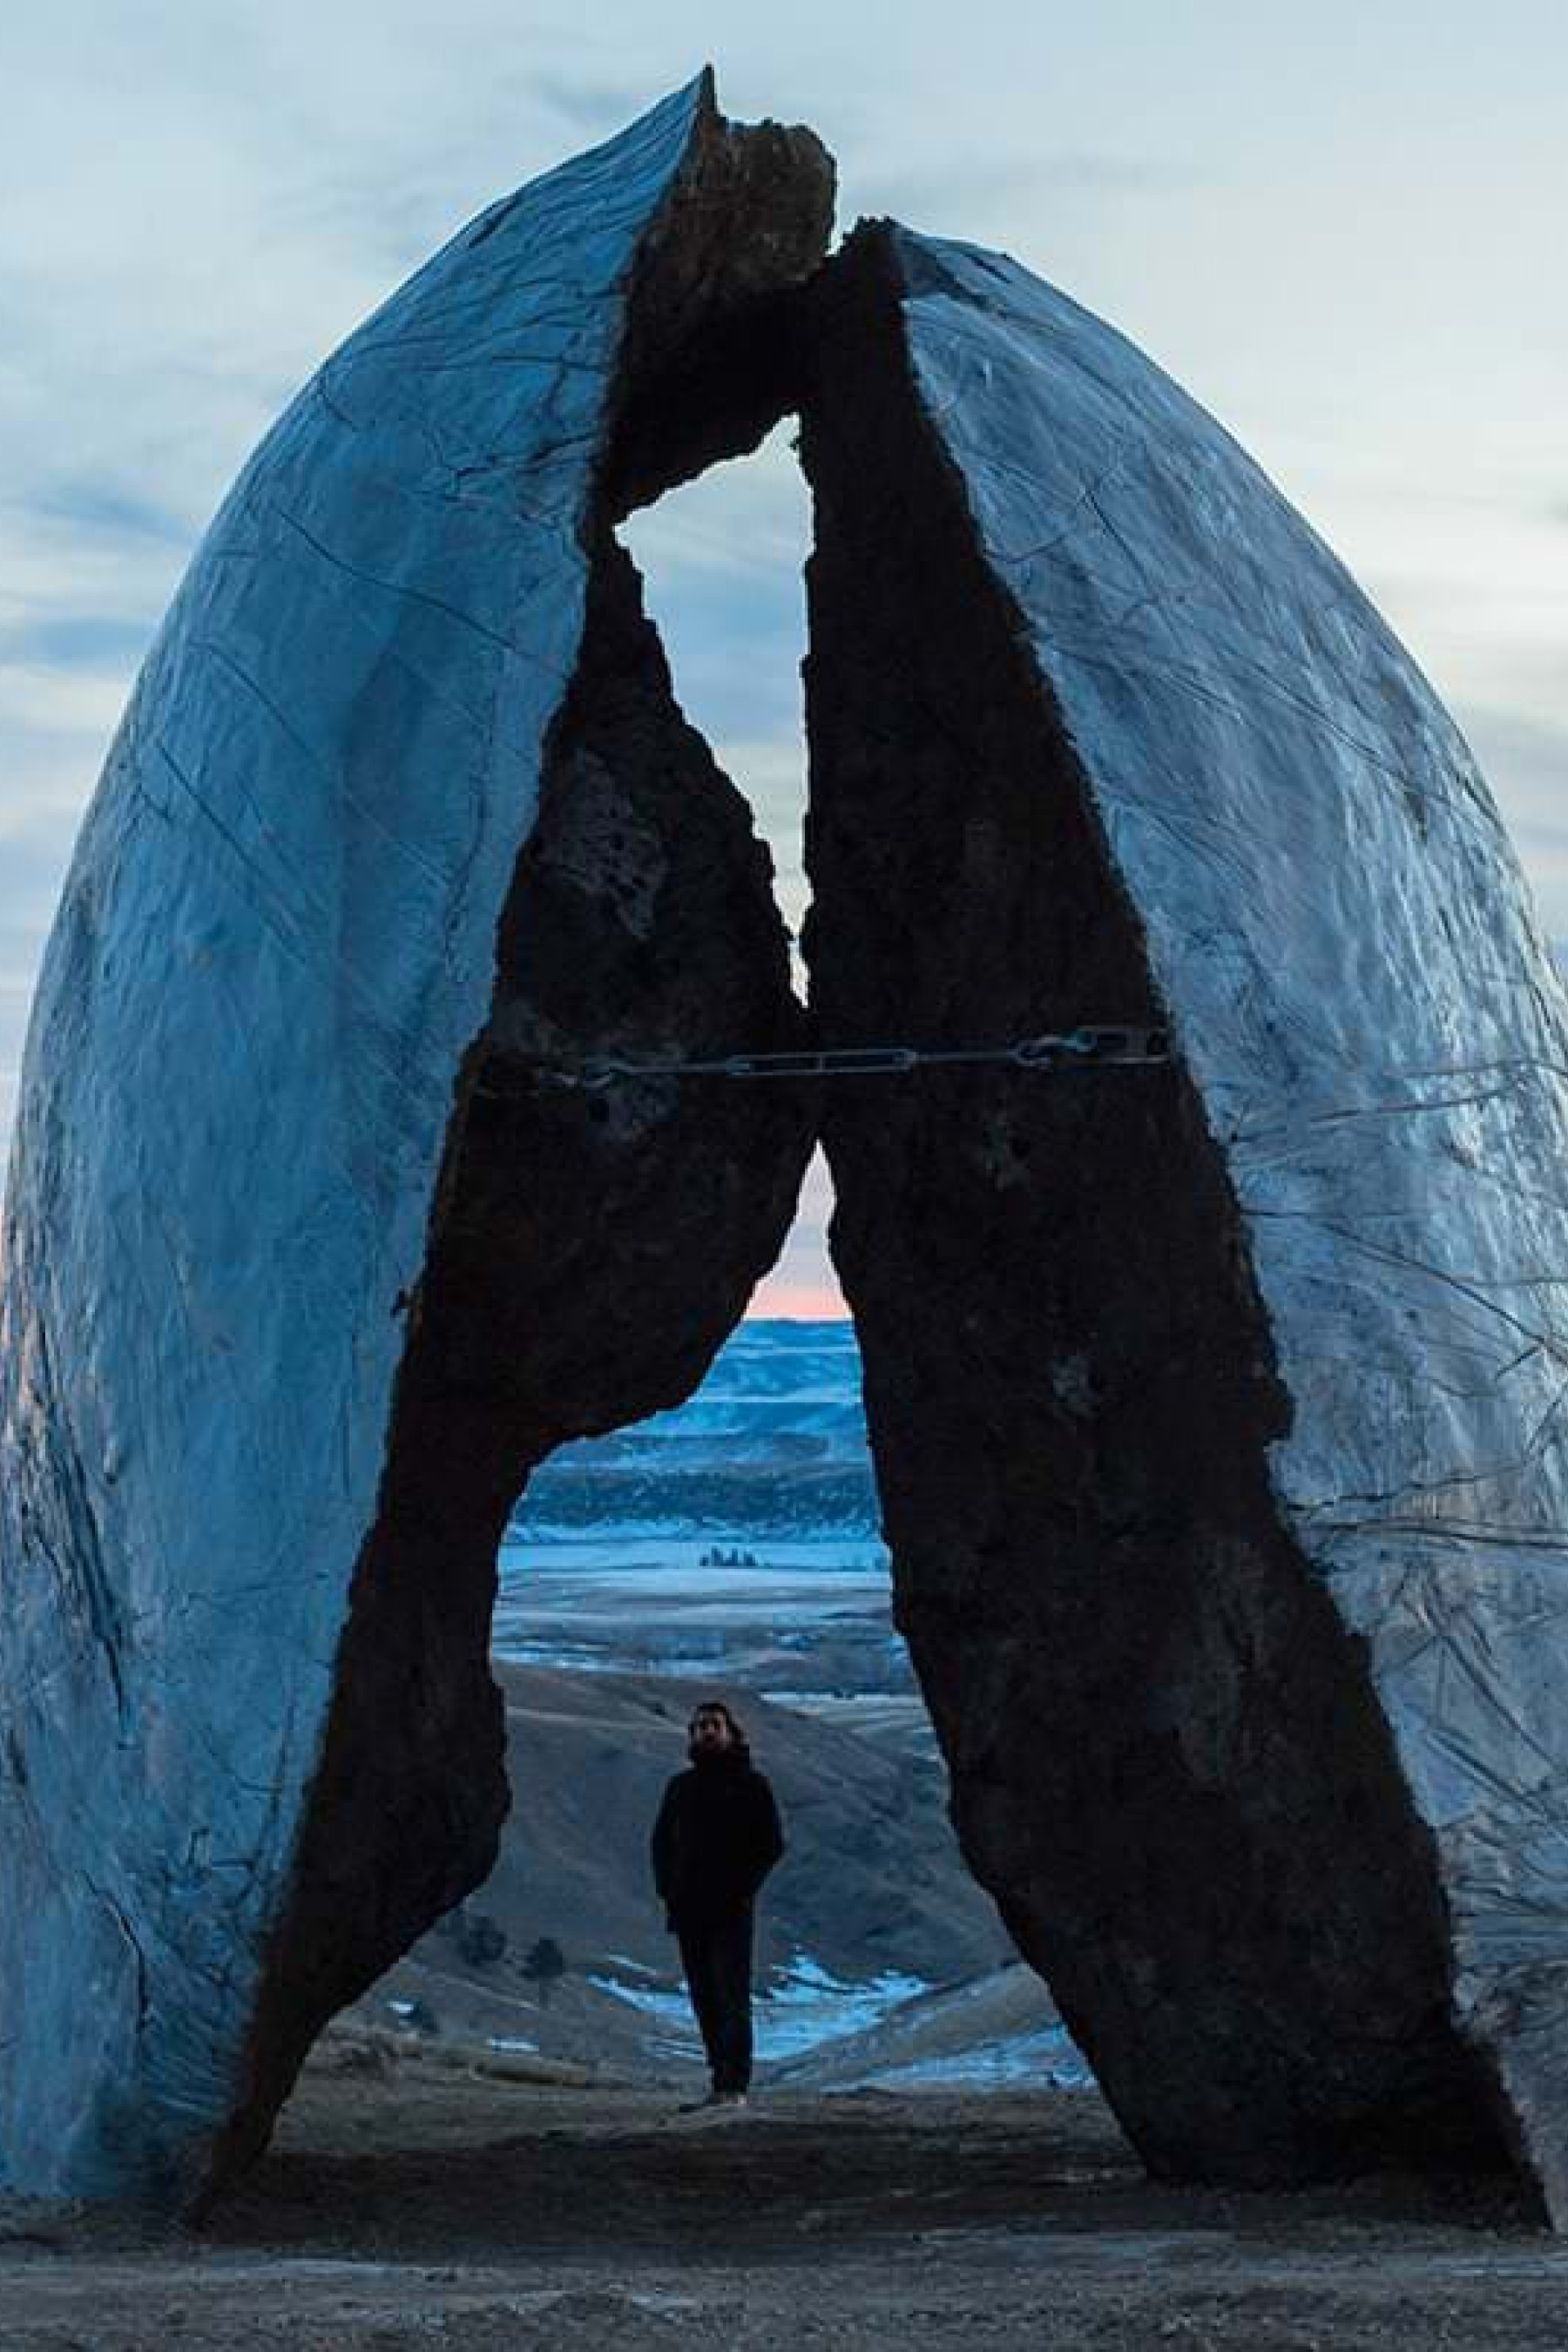 beartooth-sculpture-installation-at-the-tippet-rise-art-center-image-credit-moss-and-fog.jpeg